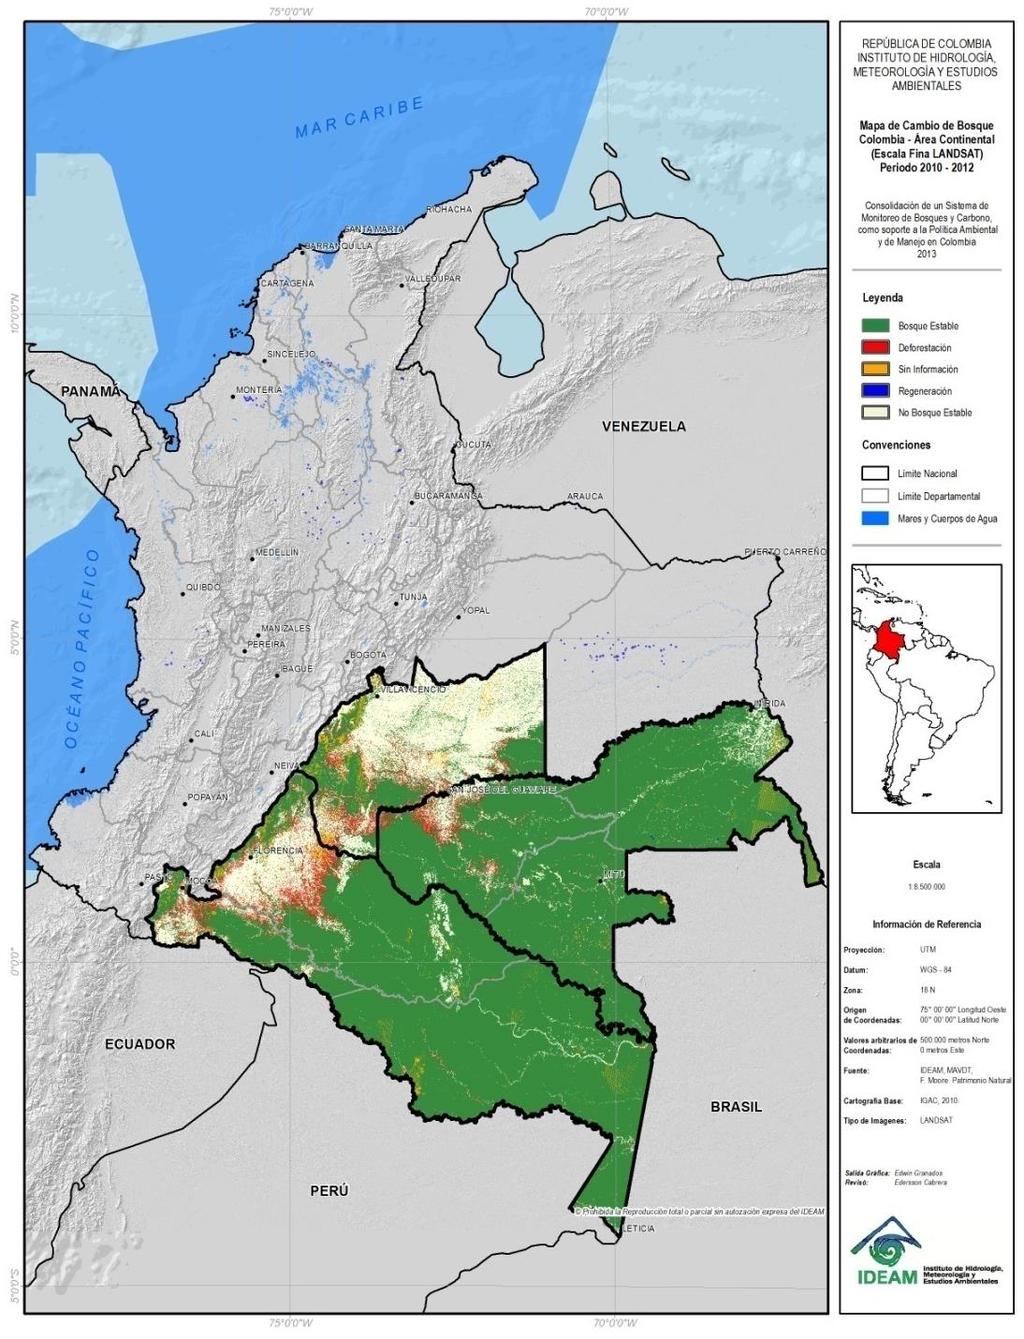 Superficie Deforestada Autoridades Regionales Años 2011-2012 Autoridad Regional Área Deforestada 2011-2012 (ha) % nacional Área Deforestaci ón anual 2011-2012 Deforestación anual 2005-2010